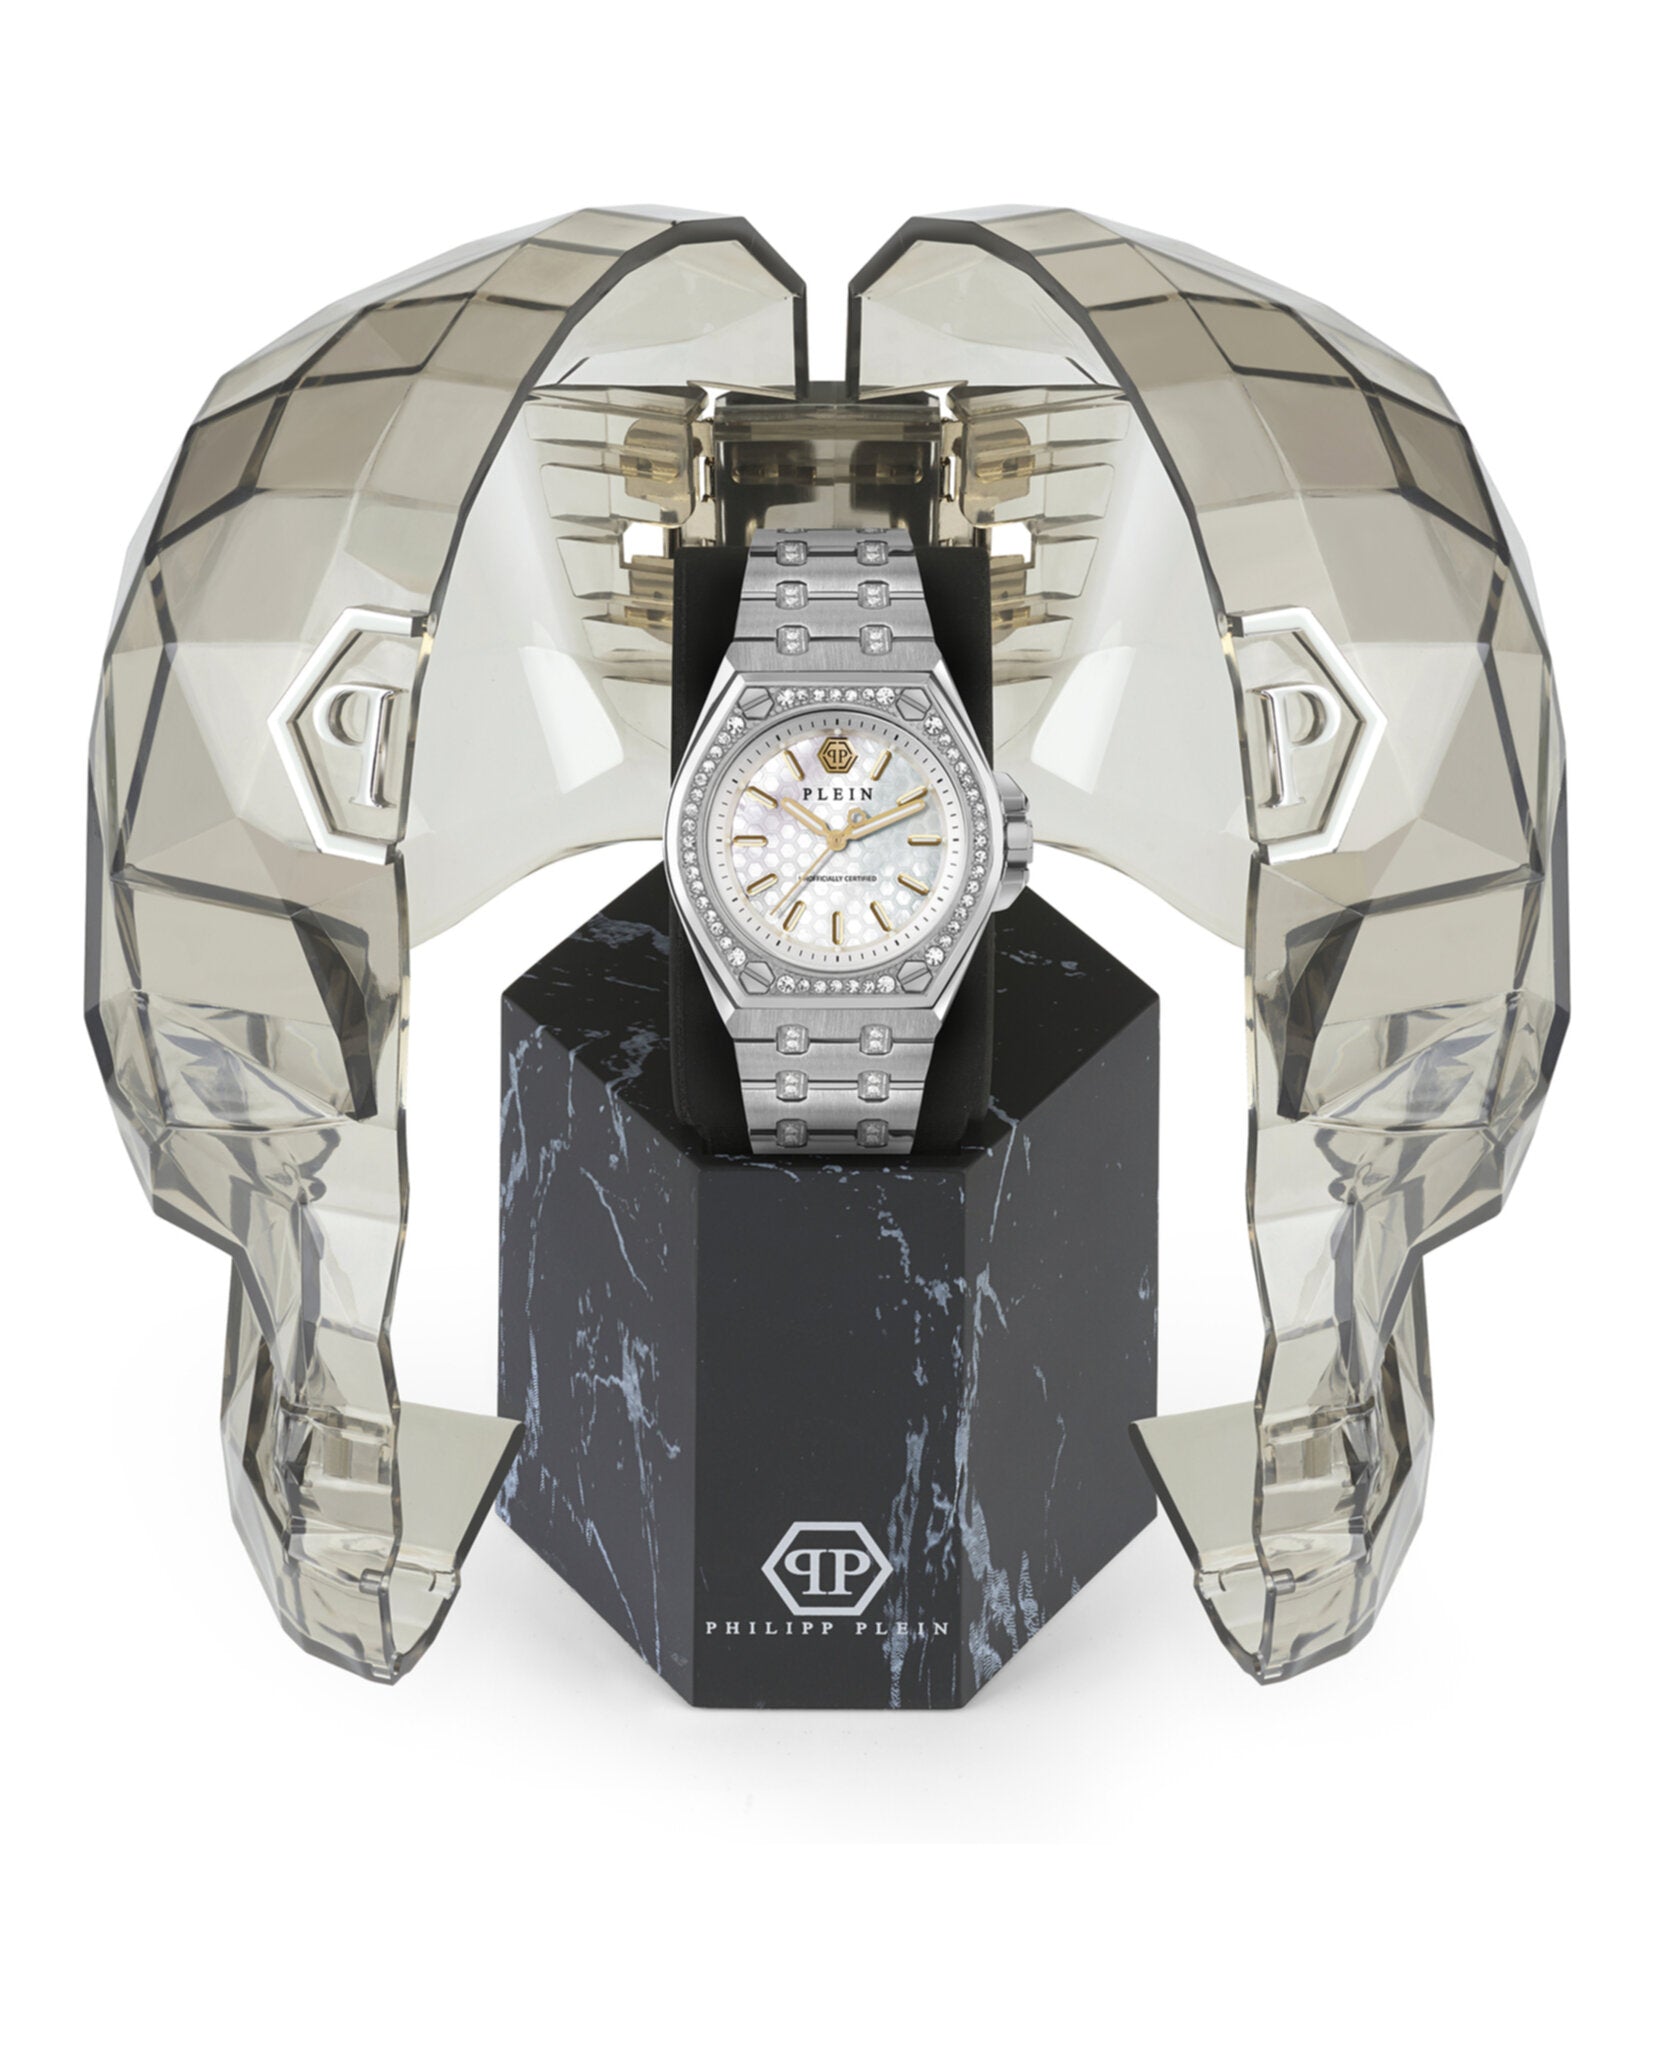 Plein Extreme Crystal Watch